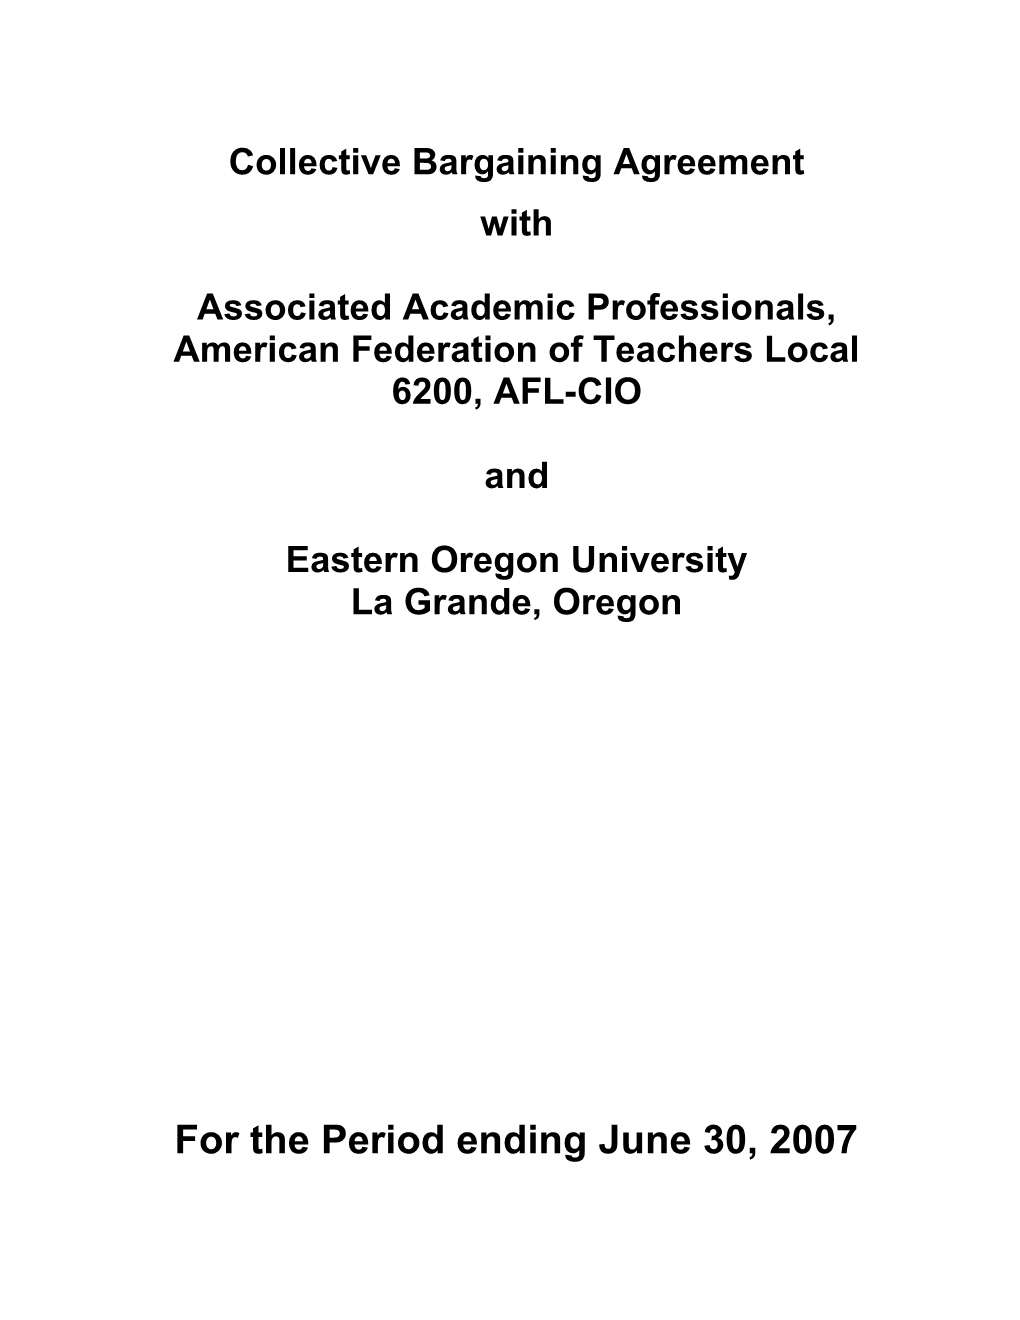 Associated Academic Professionals, American Federation of Teachers Local 6200, AFL-CIO